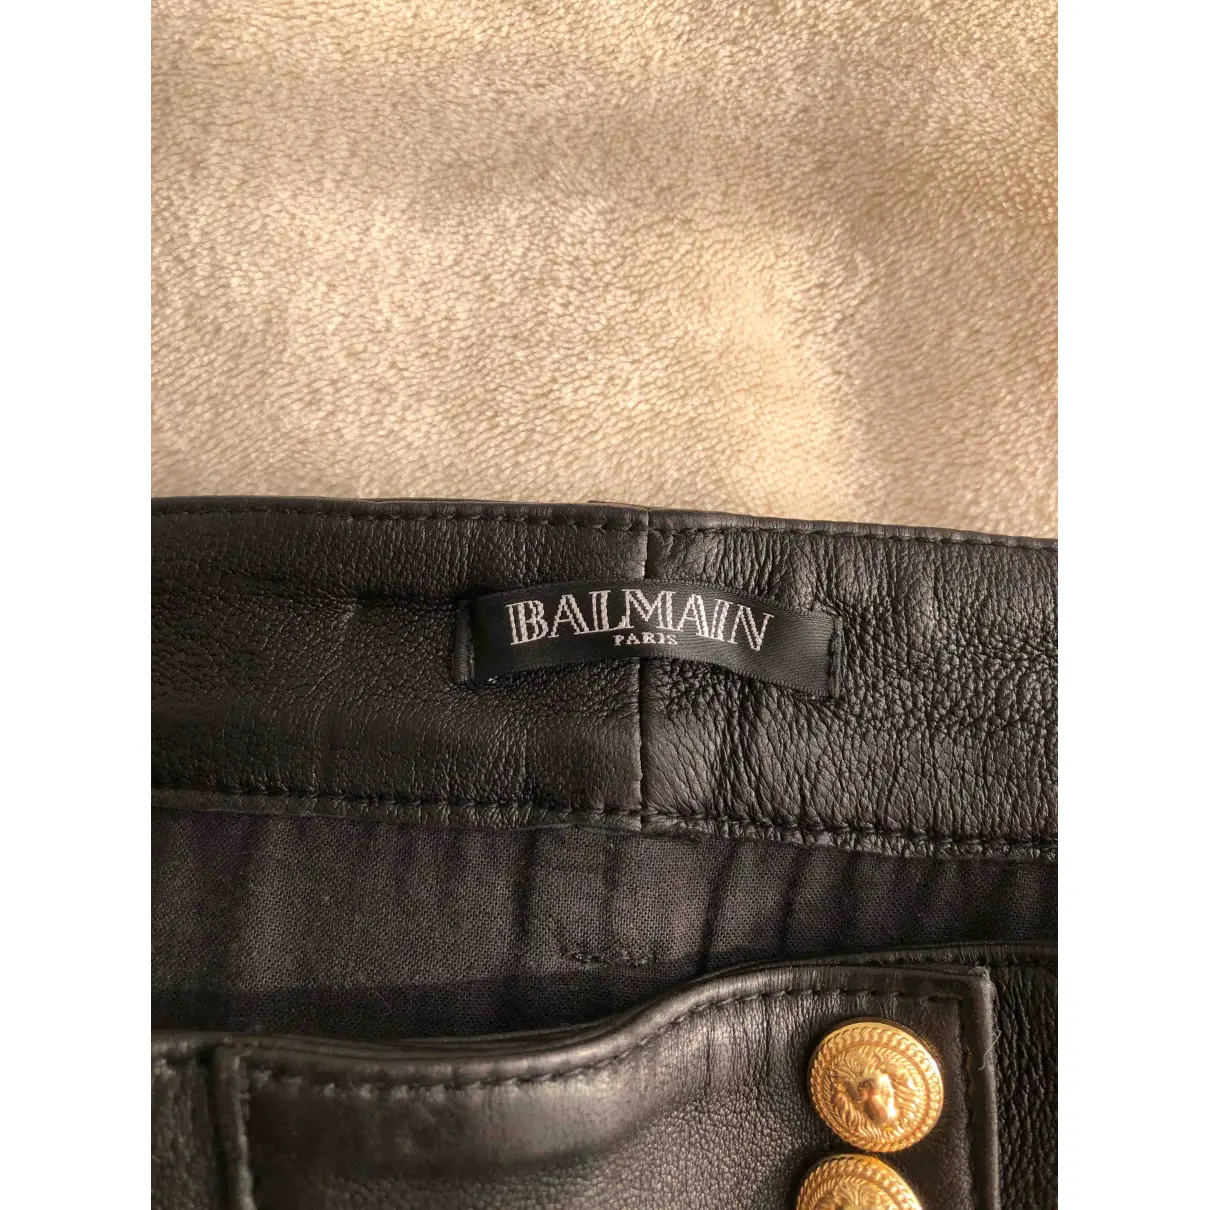 Buy Balmain Leather trousers online